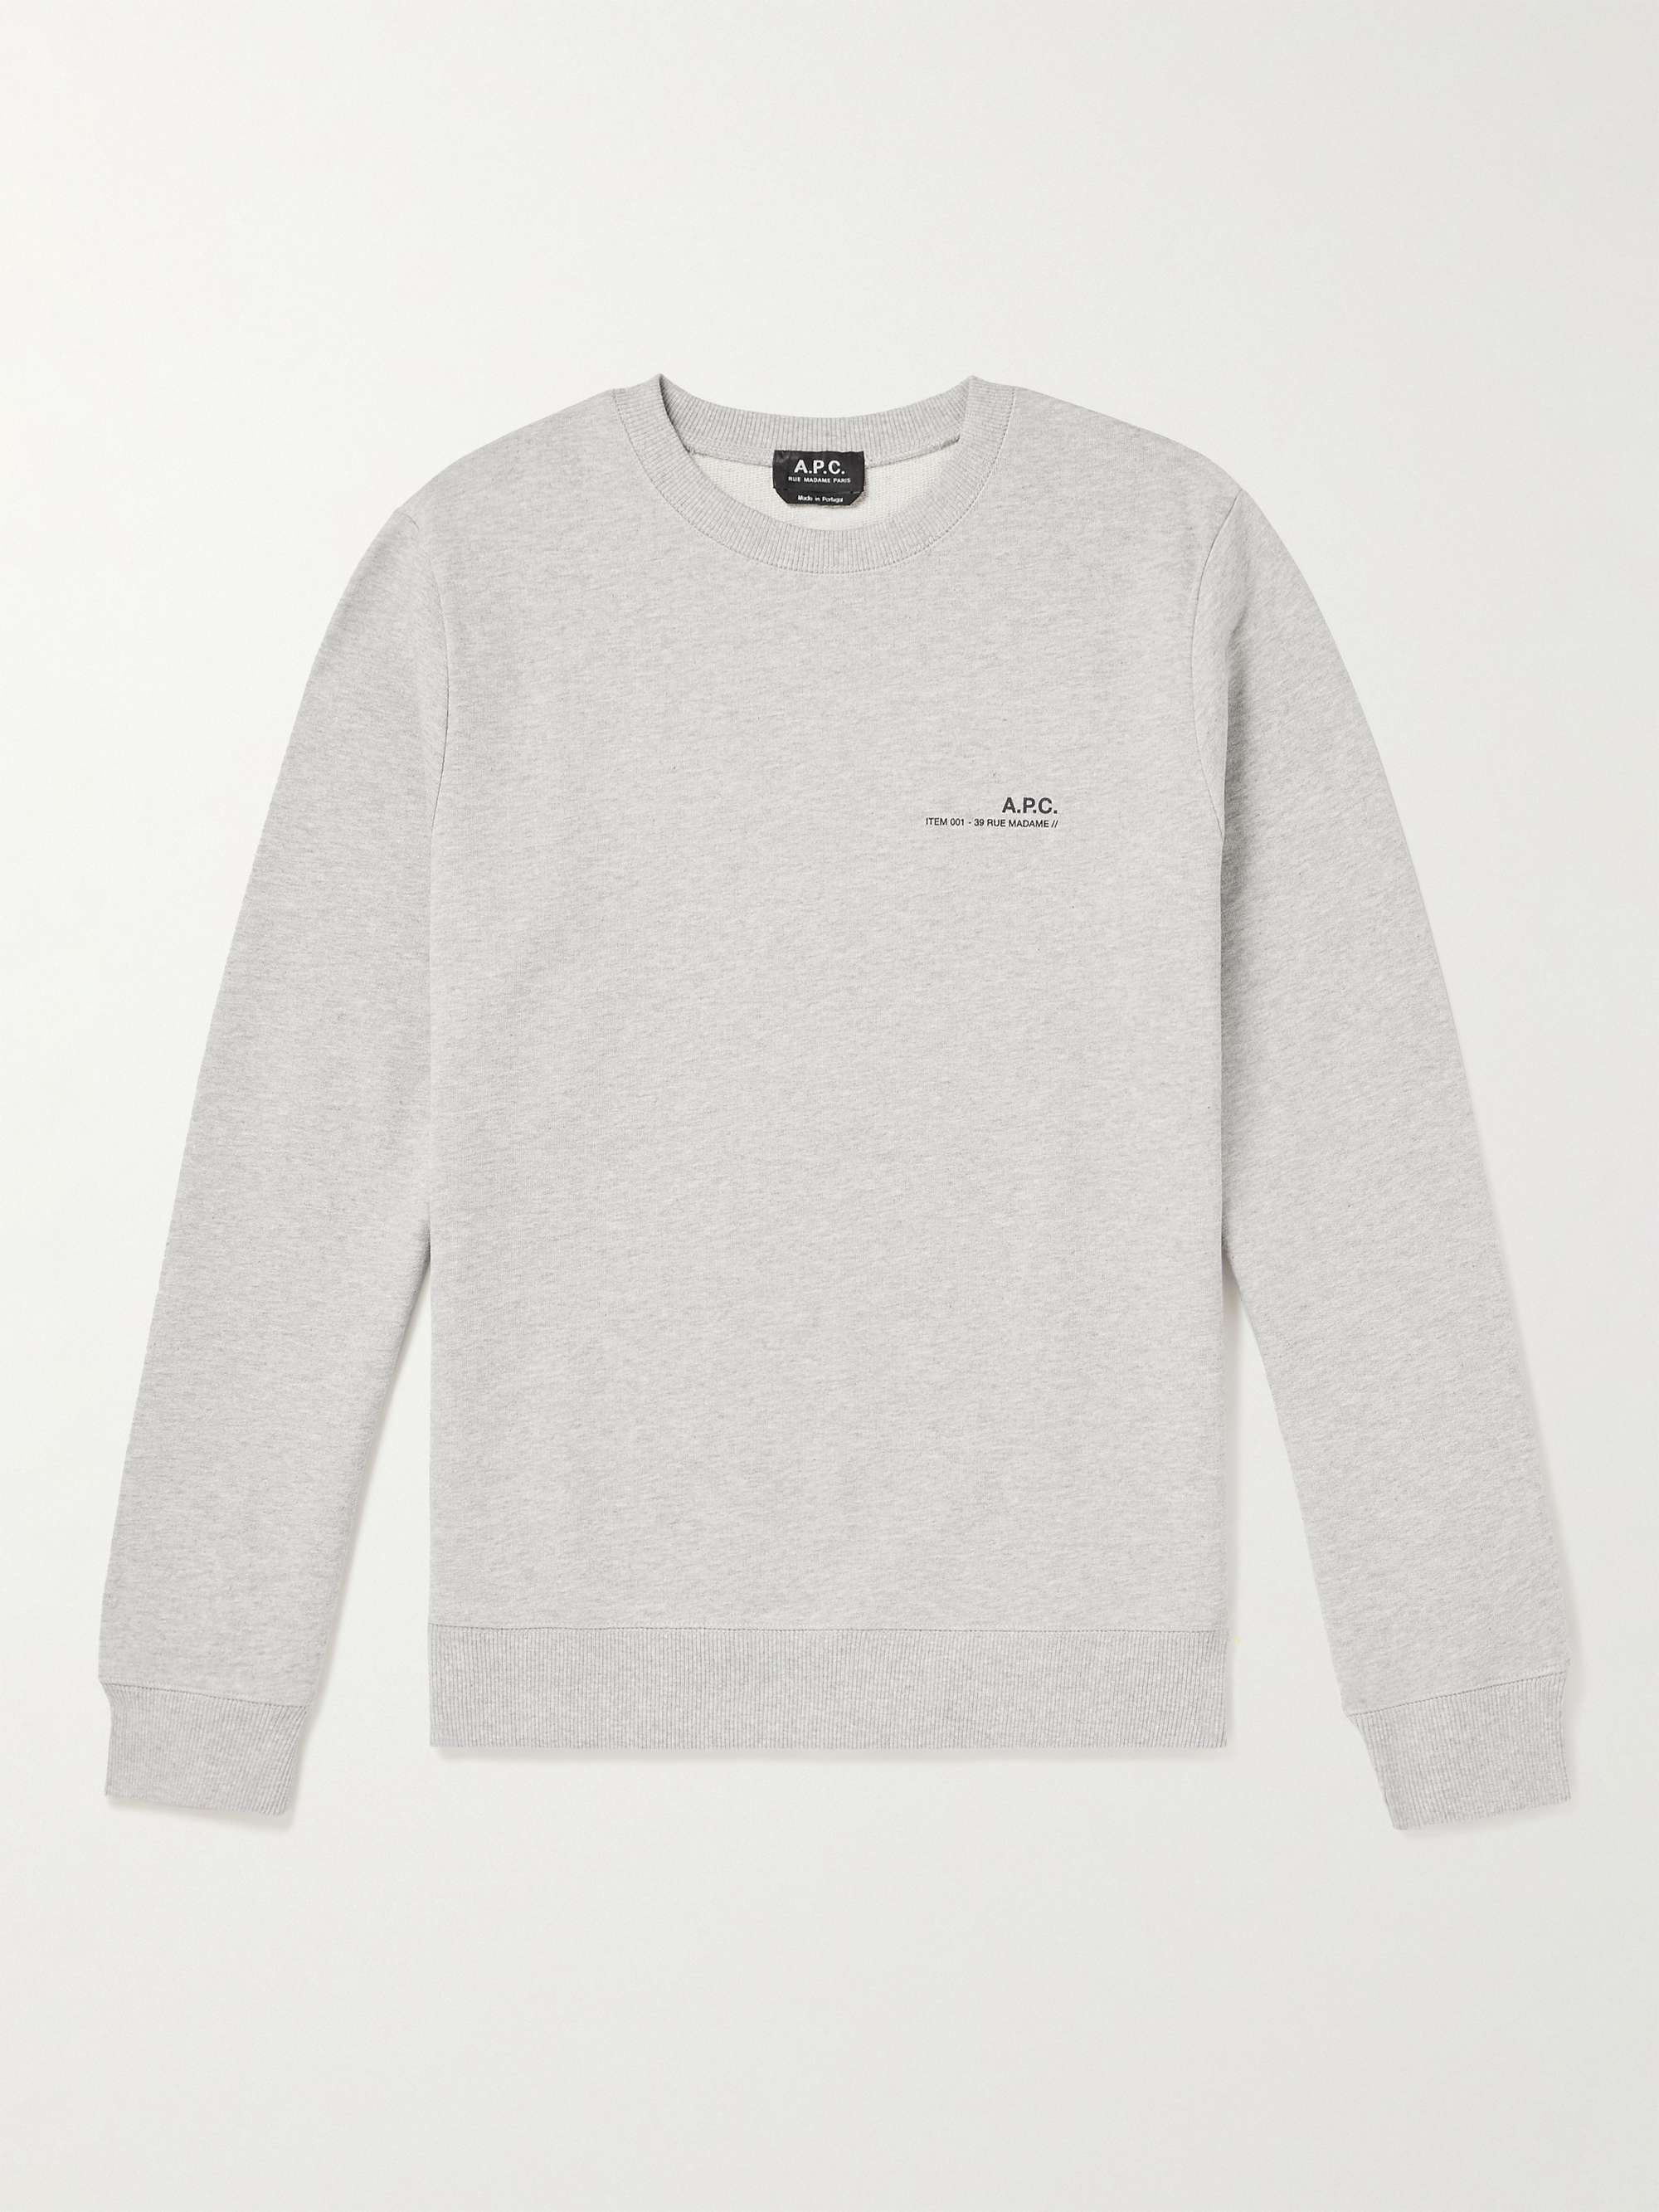 Løs morder ekskrementer A.P.C. Item Logo-Print Cotton-Jersey Sweatshirt for Men | MR PORTER